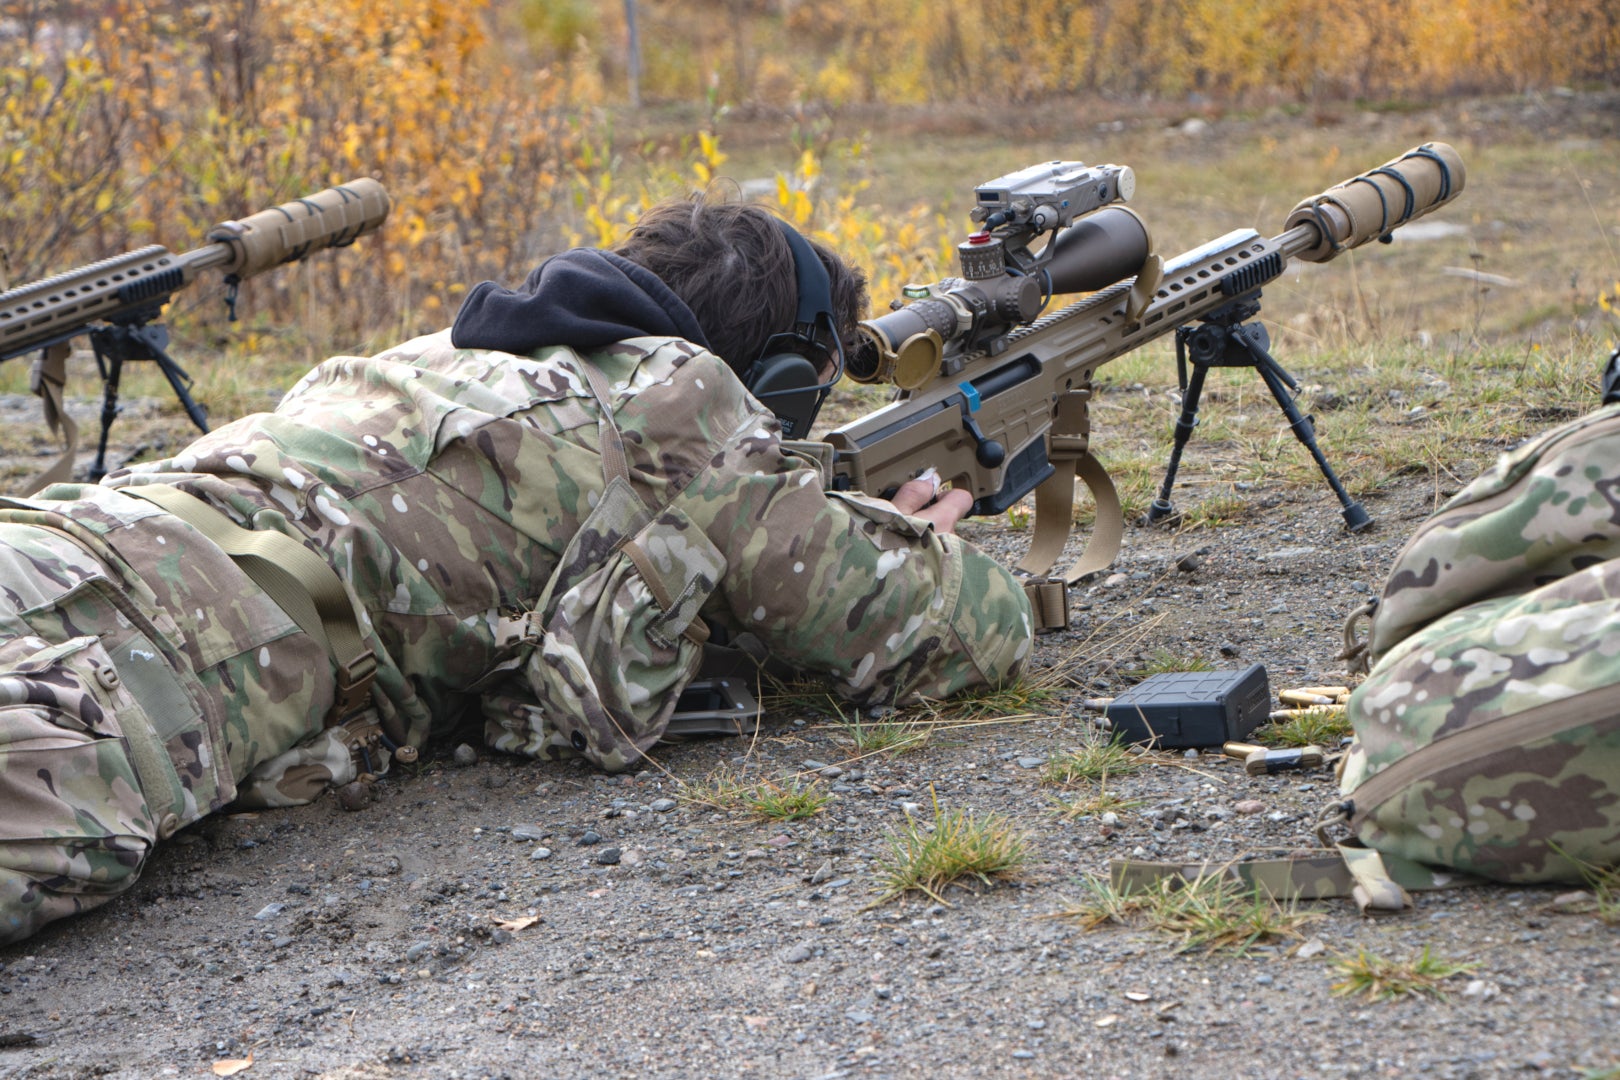 barrett .50 caliber sniper rifle replacement sought by socom